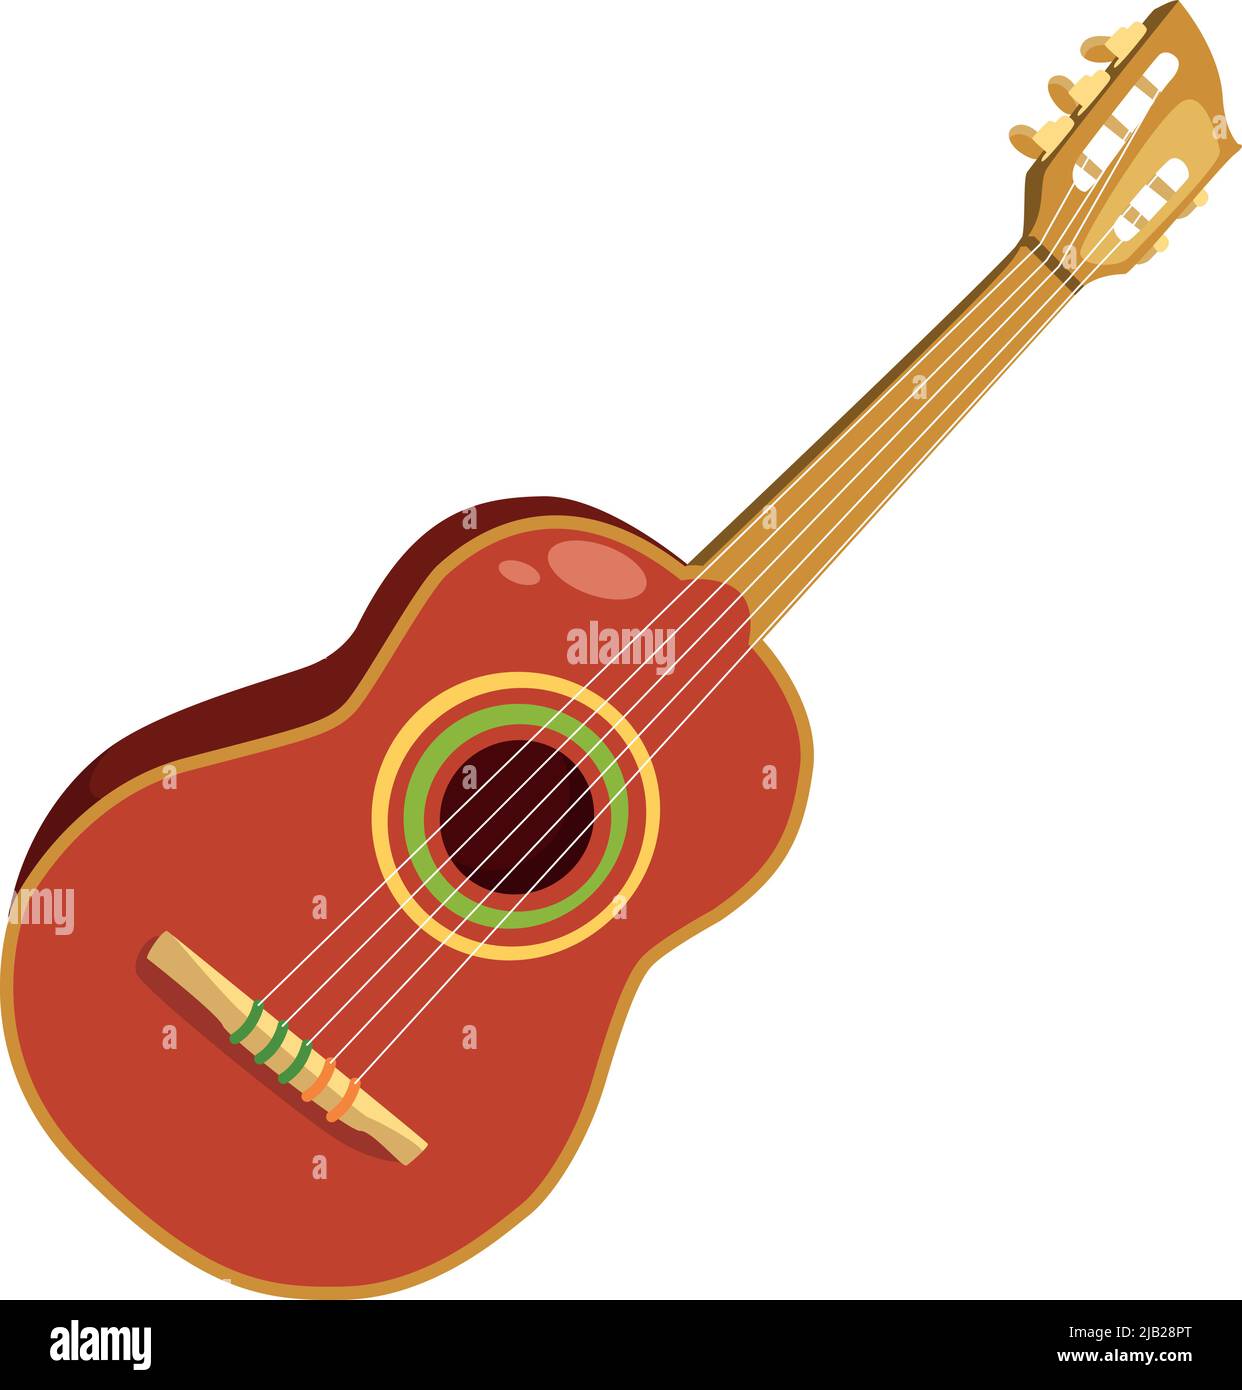 Guitarra de dibujos animados fotografías e imágenes de alta resolución -  Alamy